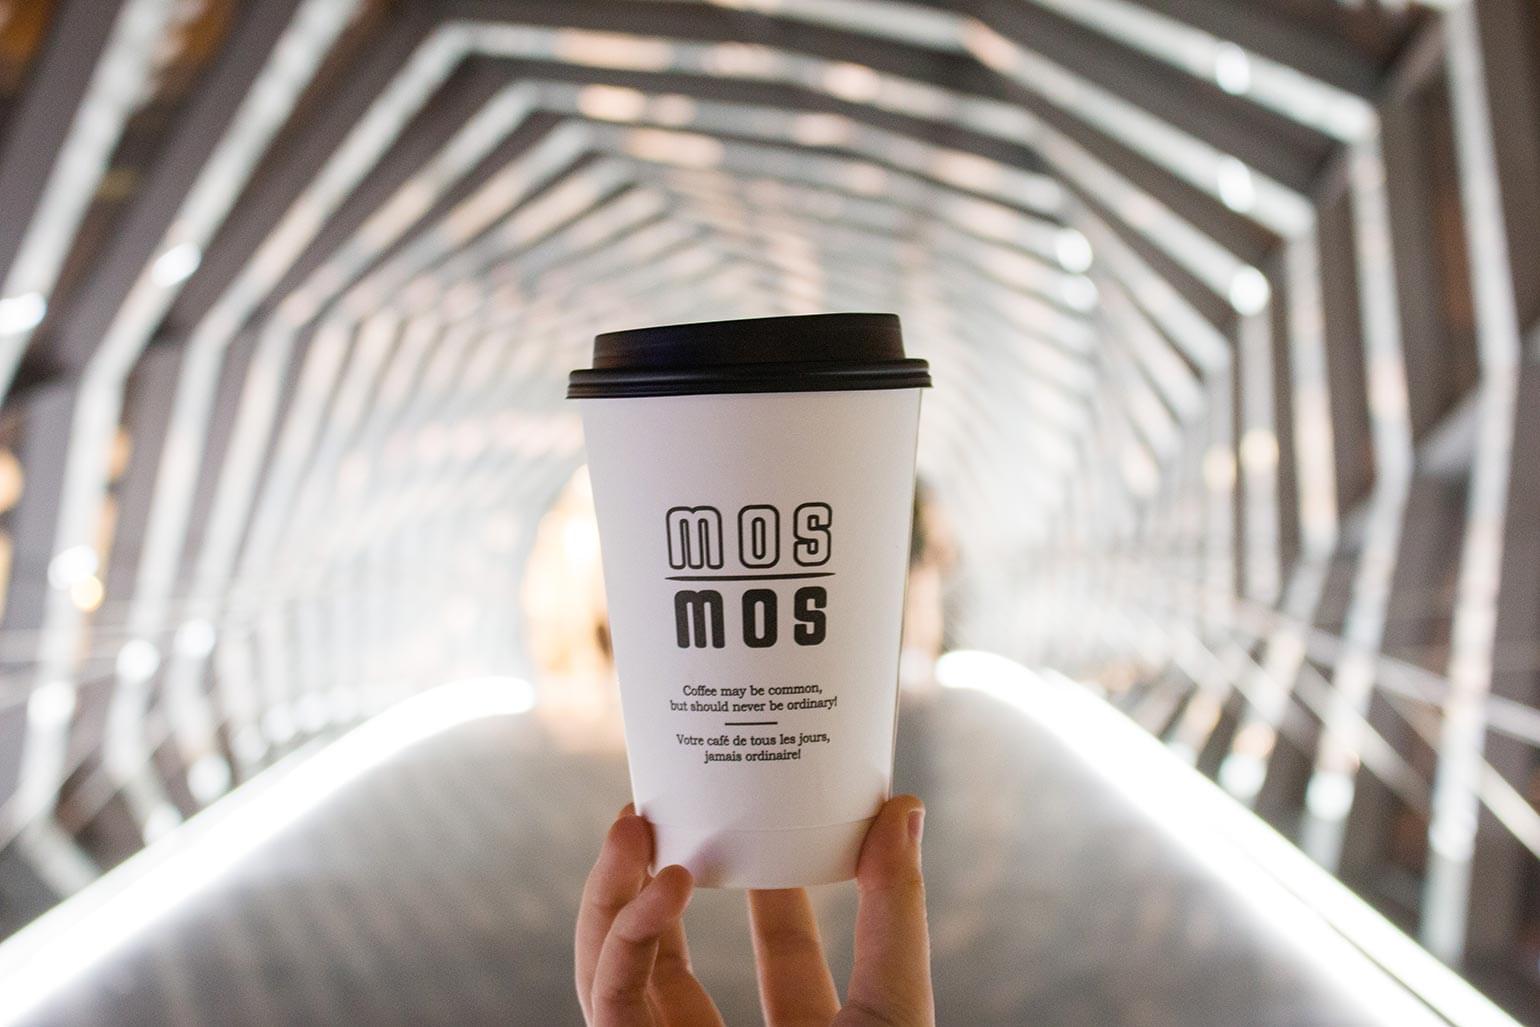 A Mos Mos coffee at the Toronto Eaton Centre.